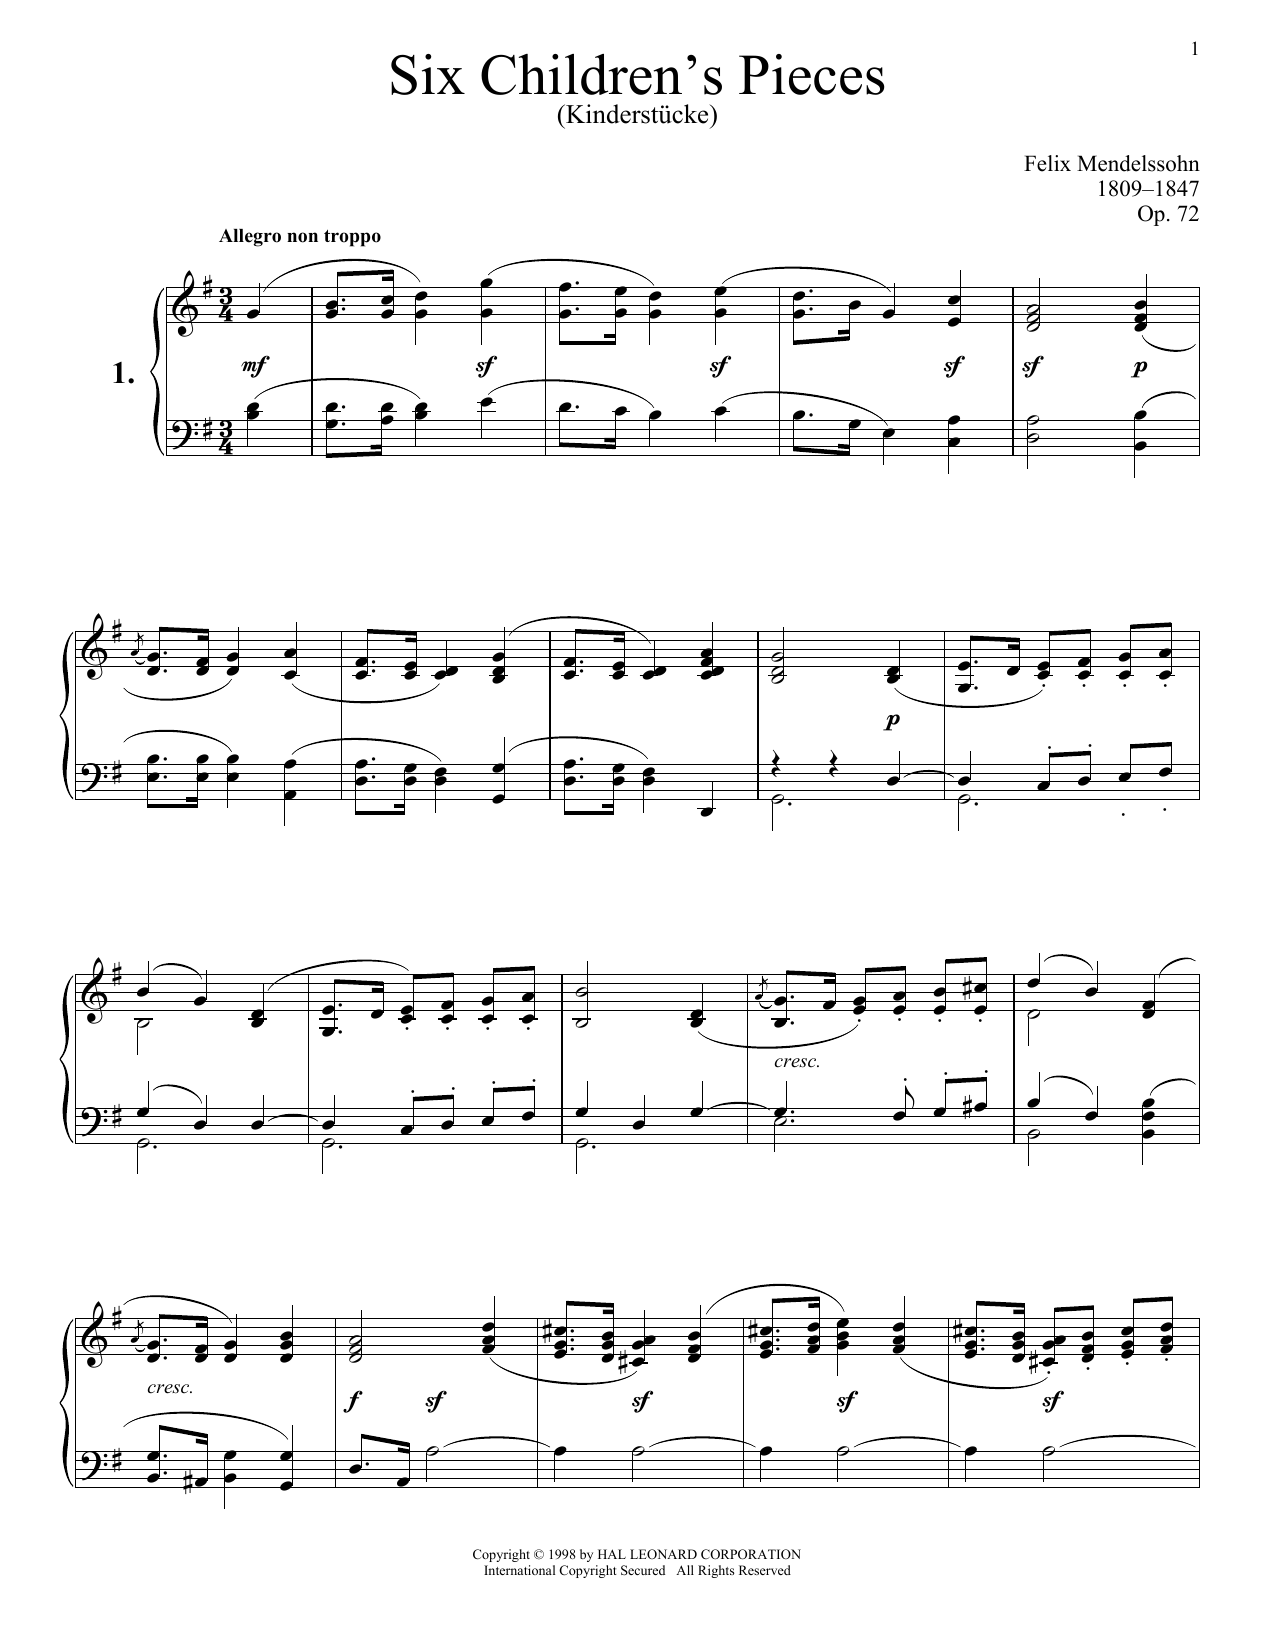 Download Felix Mendelssohn Six Children's Pieces (Kinderstucke), Op. 72 Sheet Music and learn how to play Piano PDF digital score in minutes